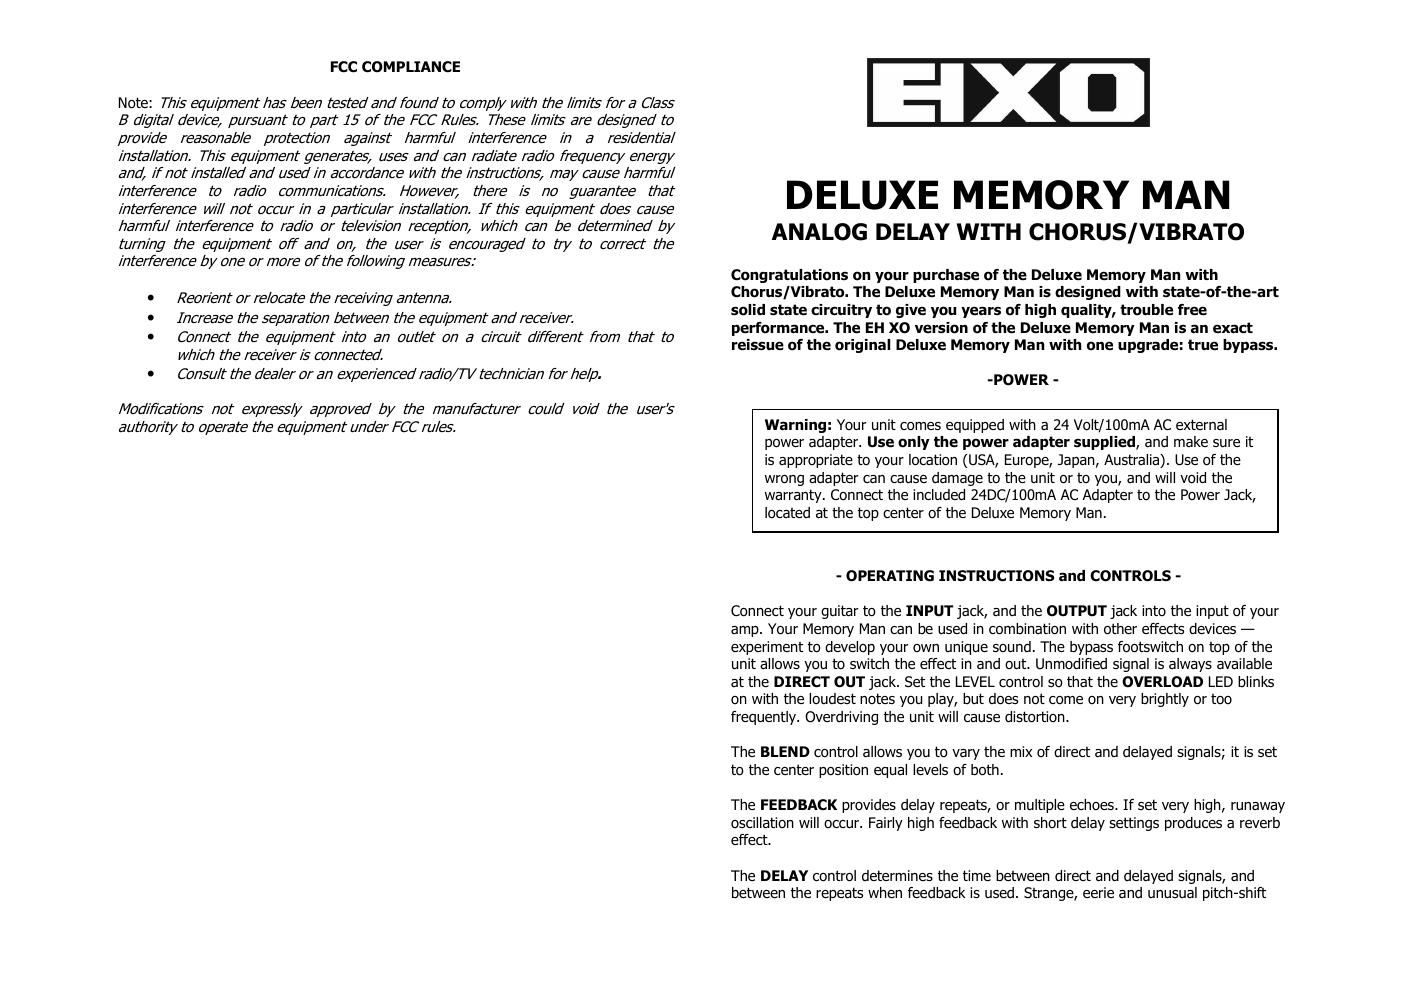 electro harmonix deluxe memory man operating instruction